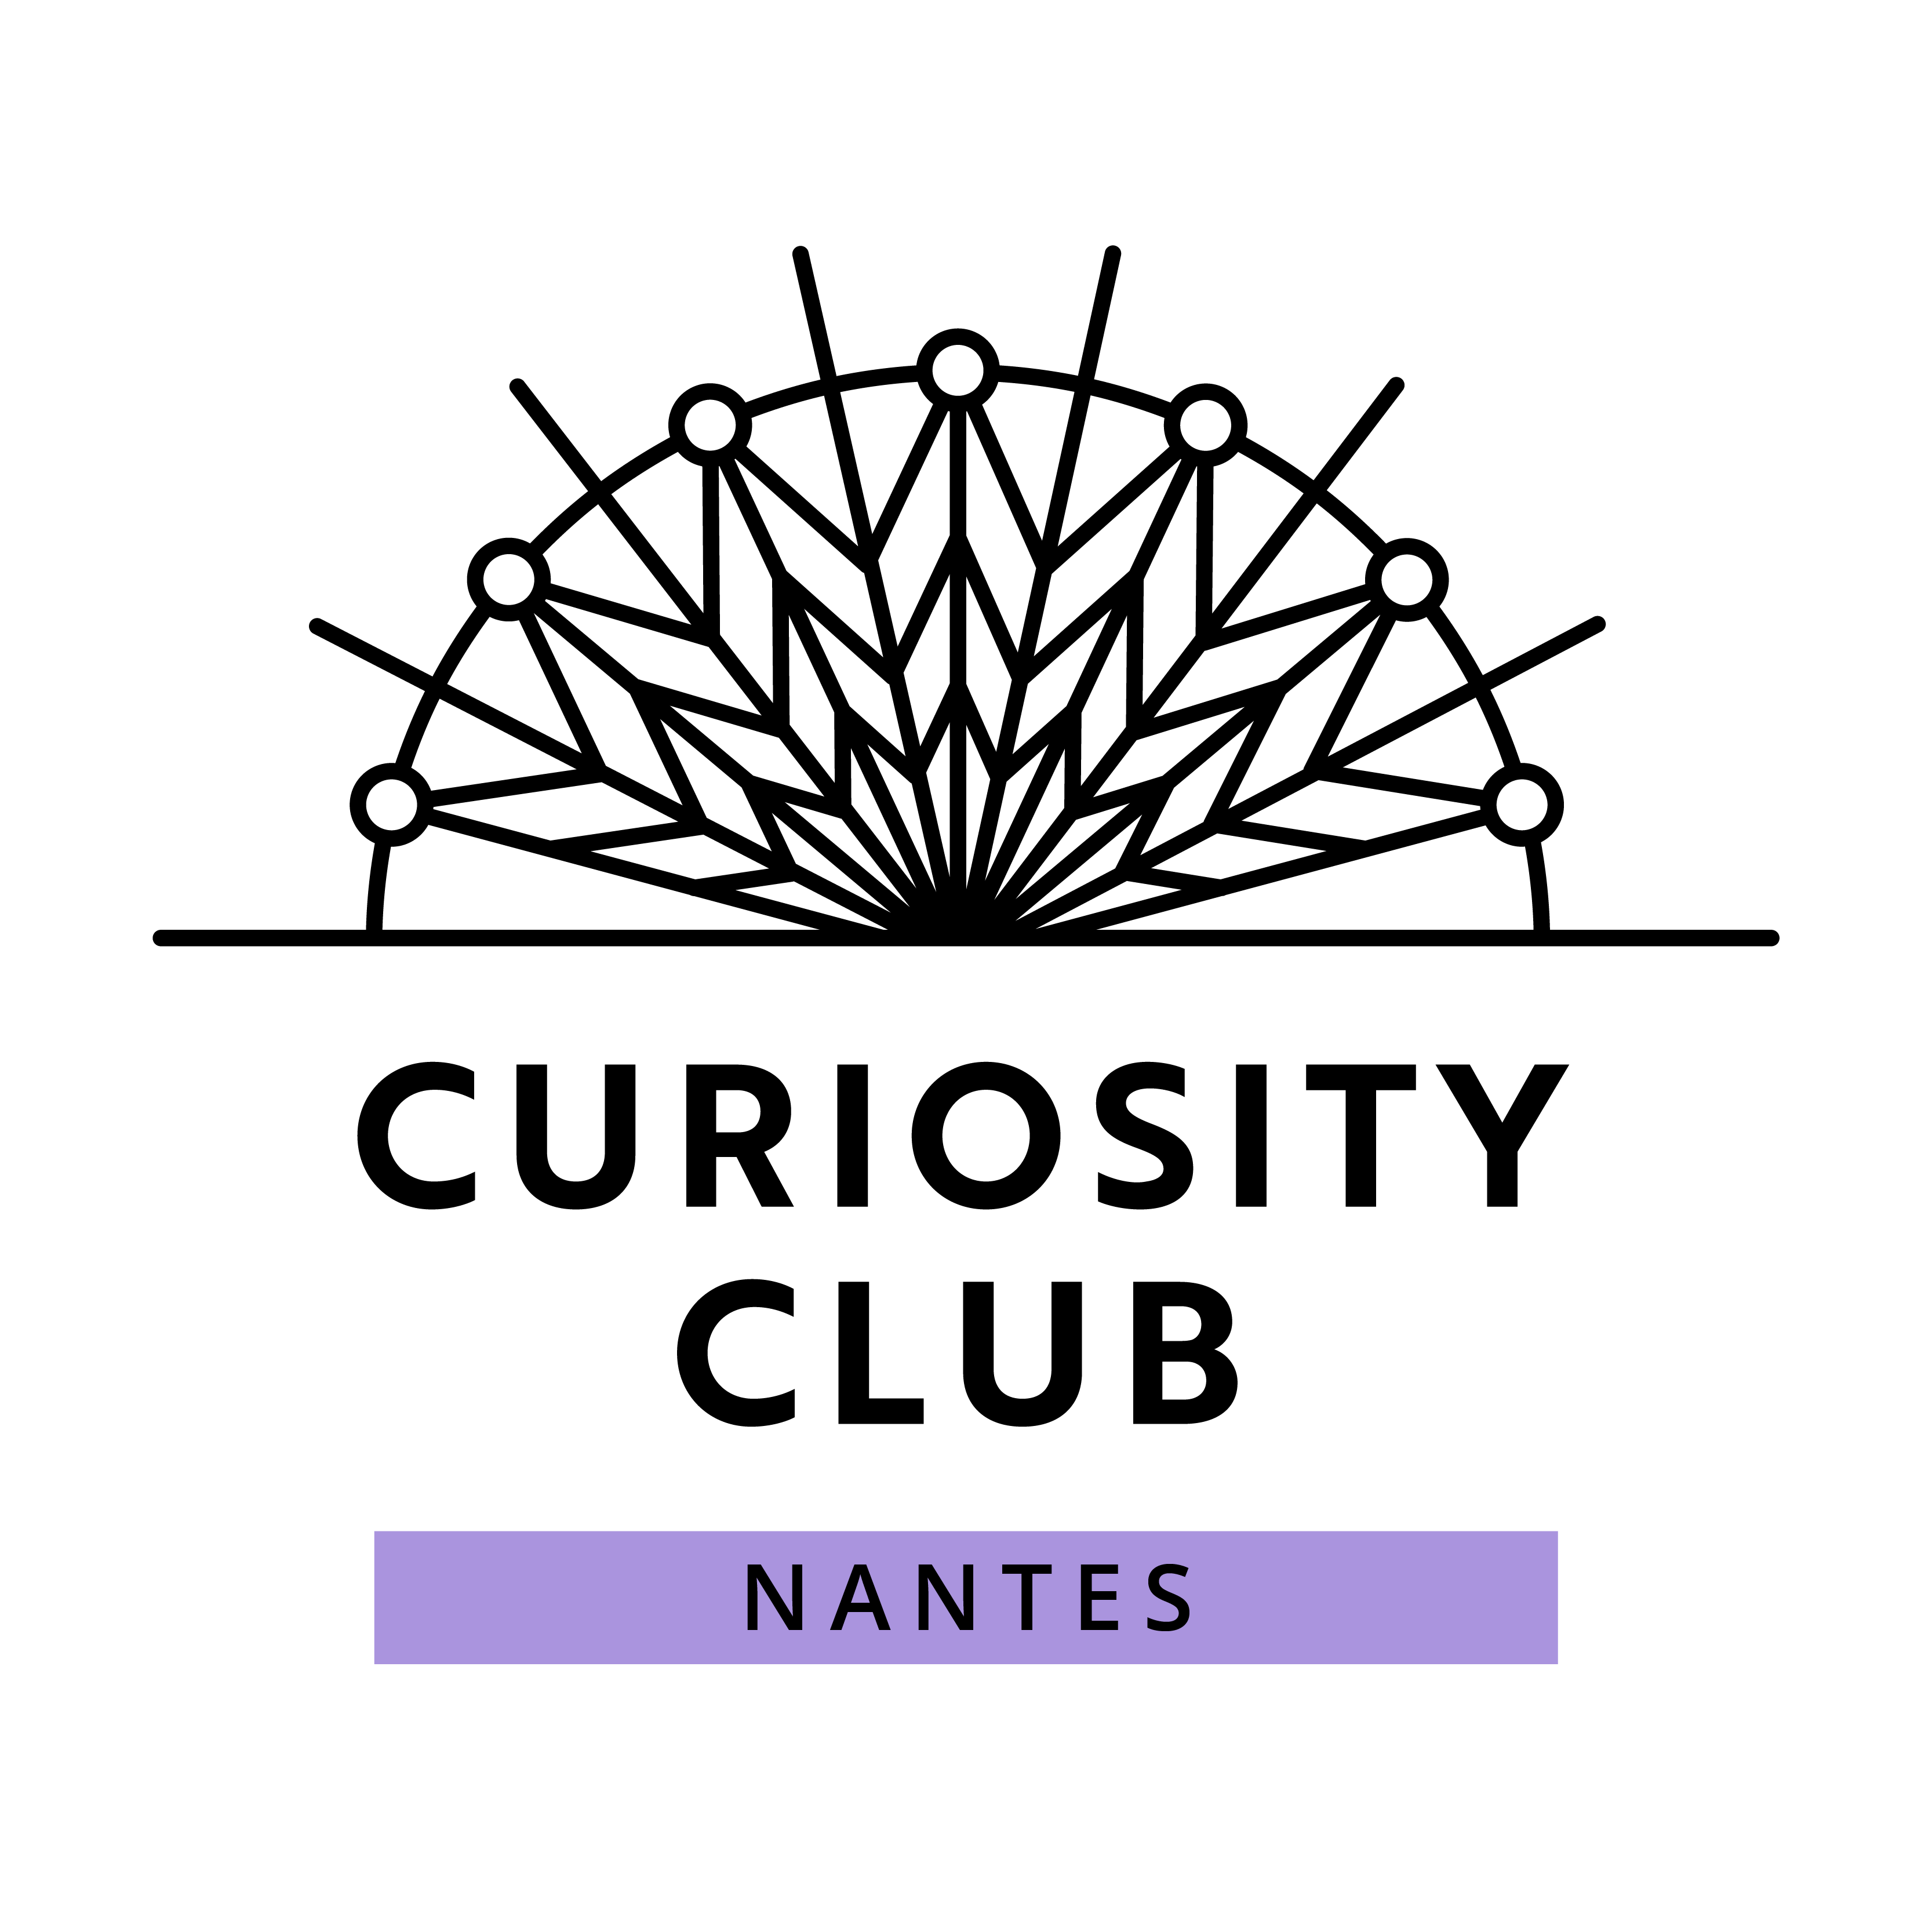 Nantes Curiosity Club (CC)